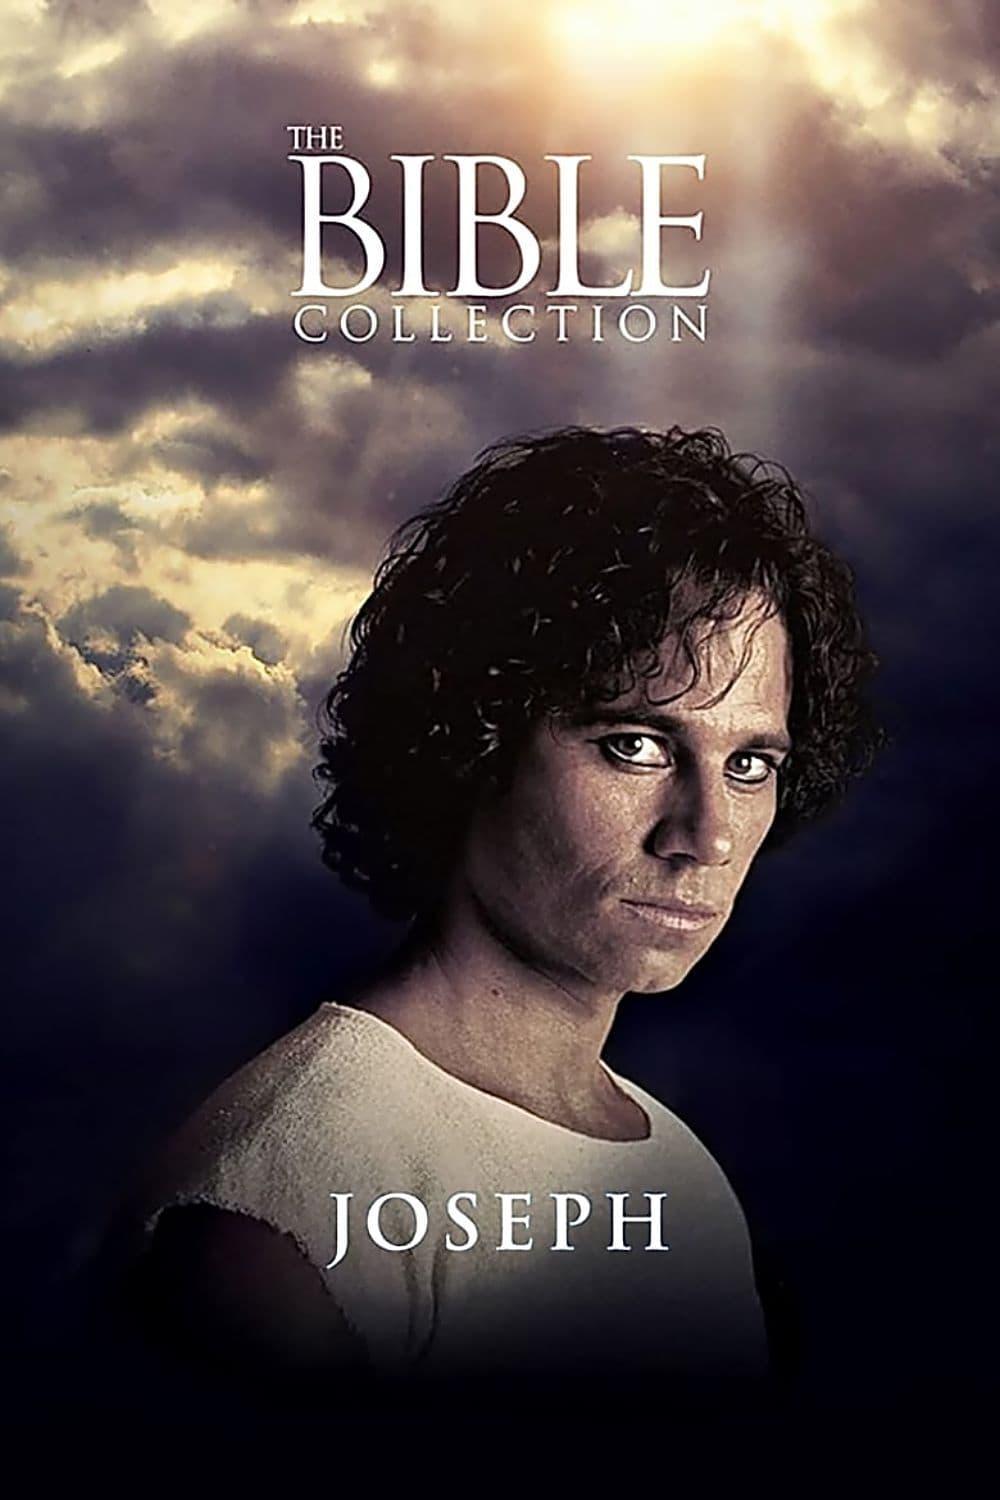 Die Bibel - Josef poster